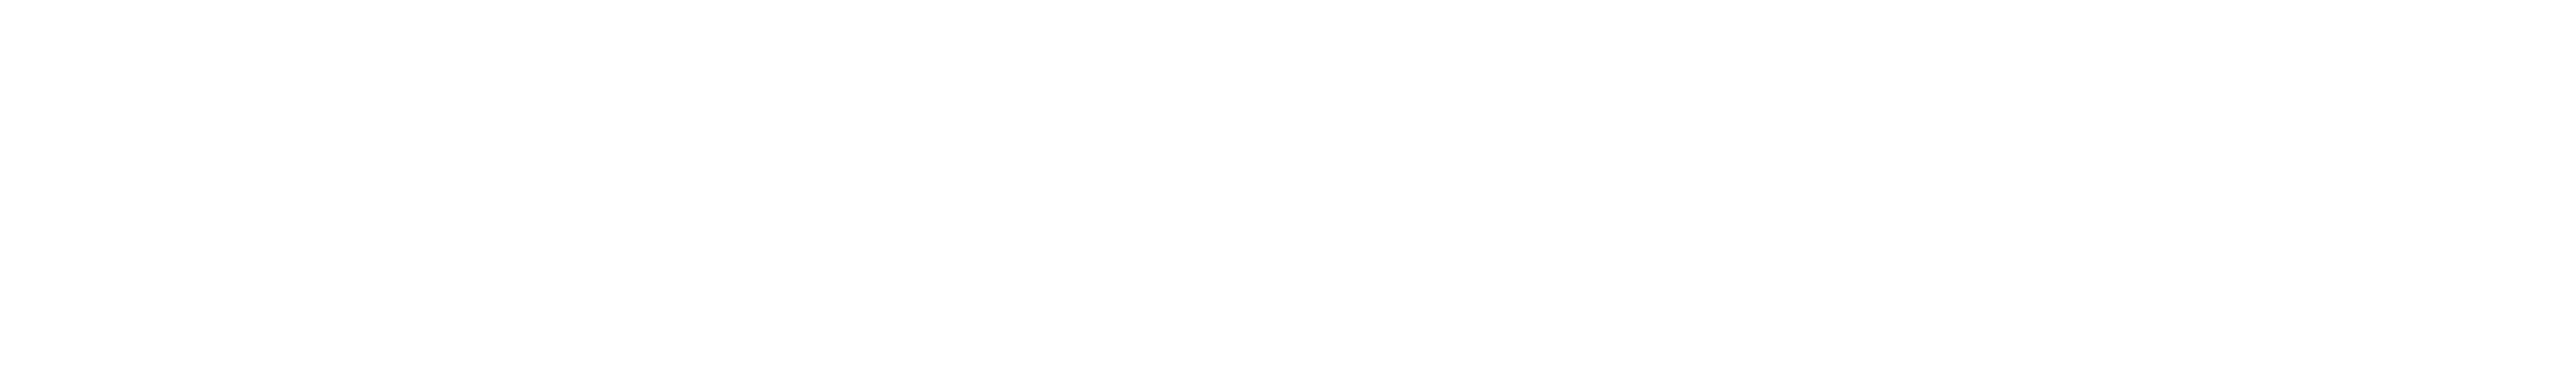 logo_ima